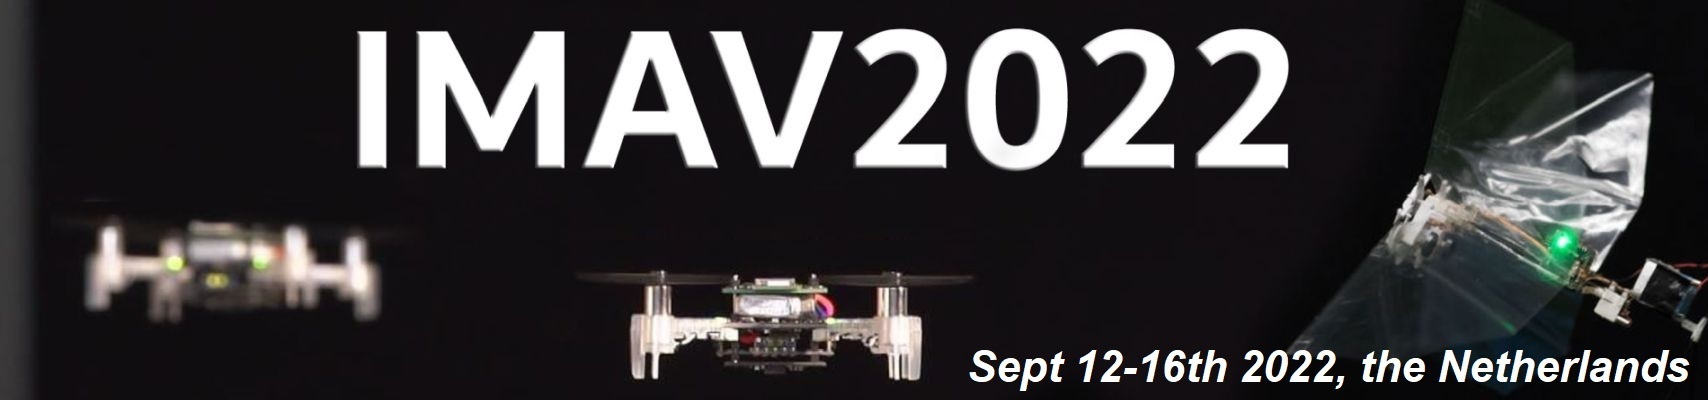 IMAV 2022 - Sept 12th to 16th 2022